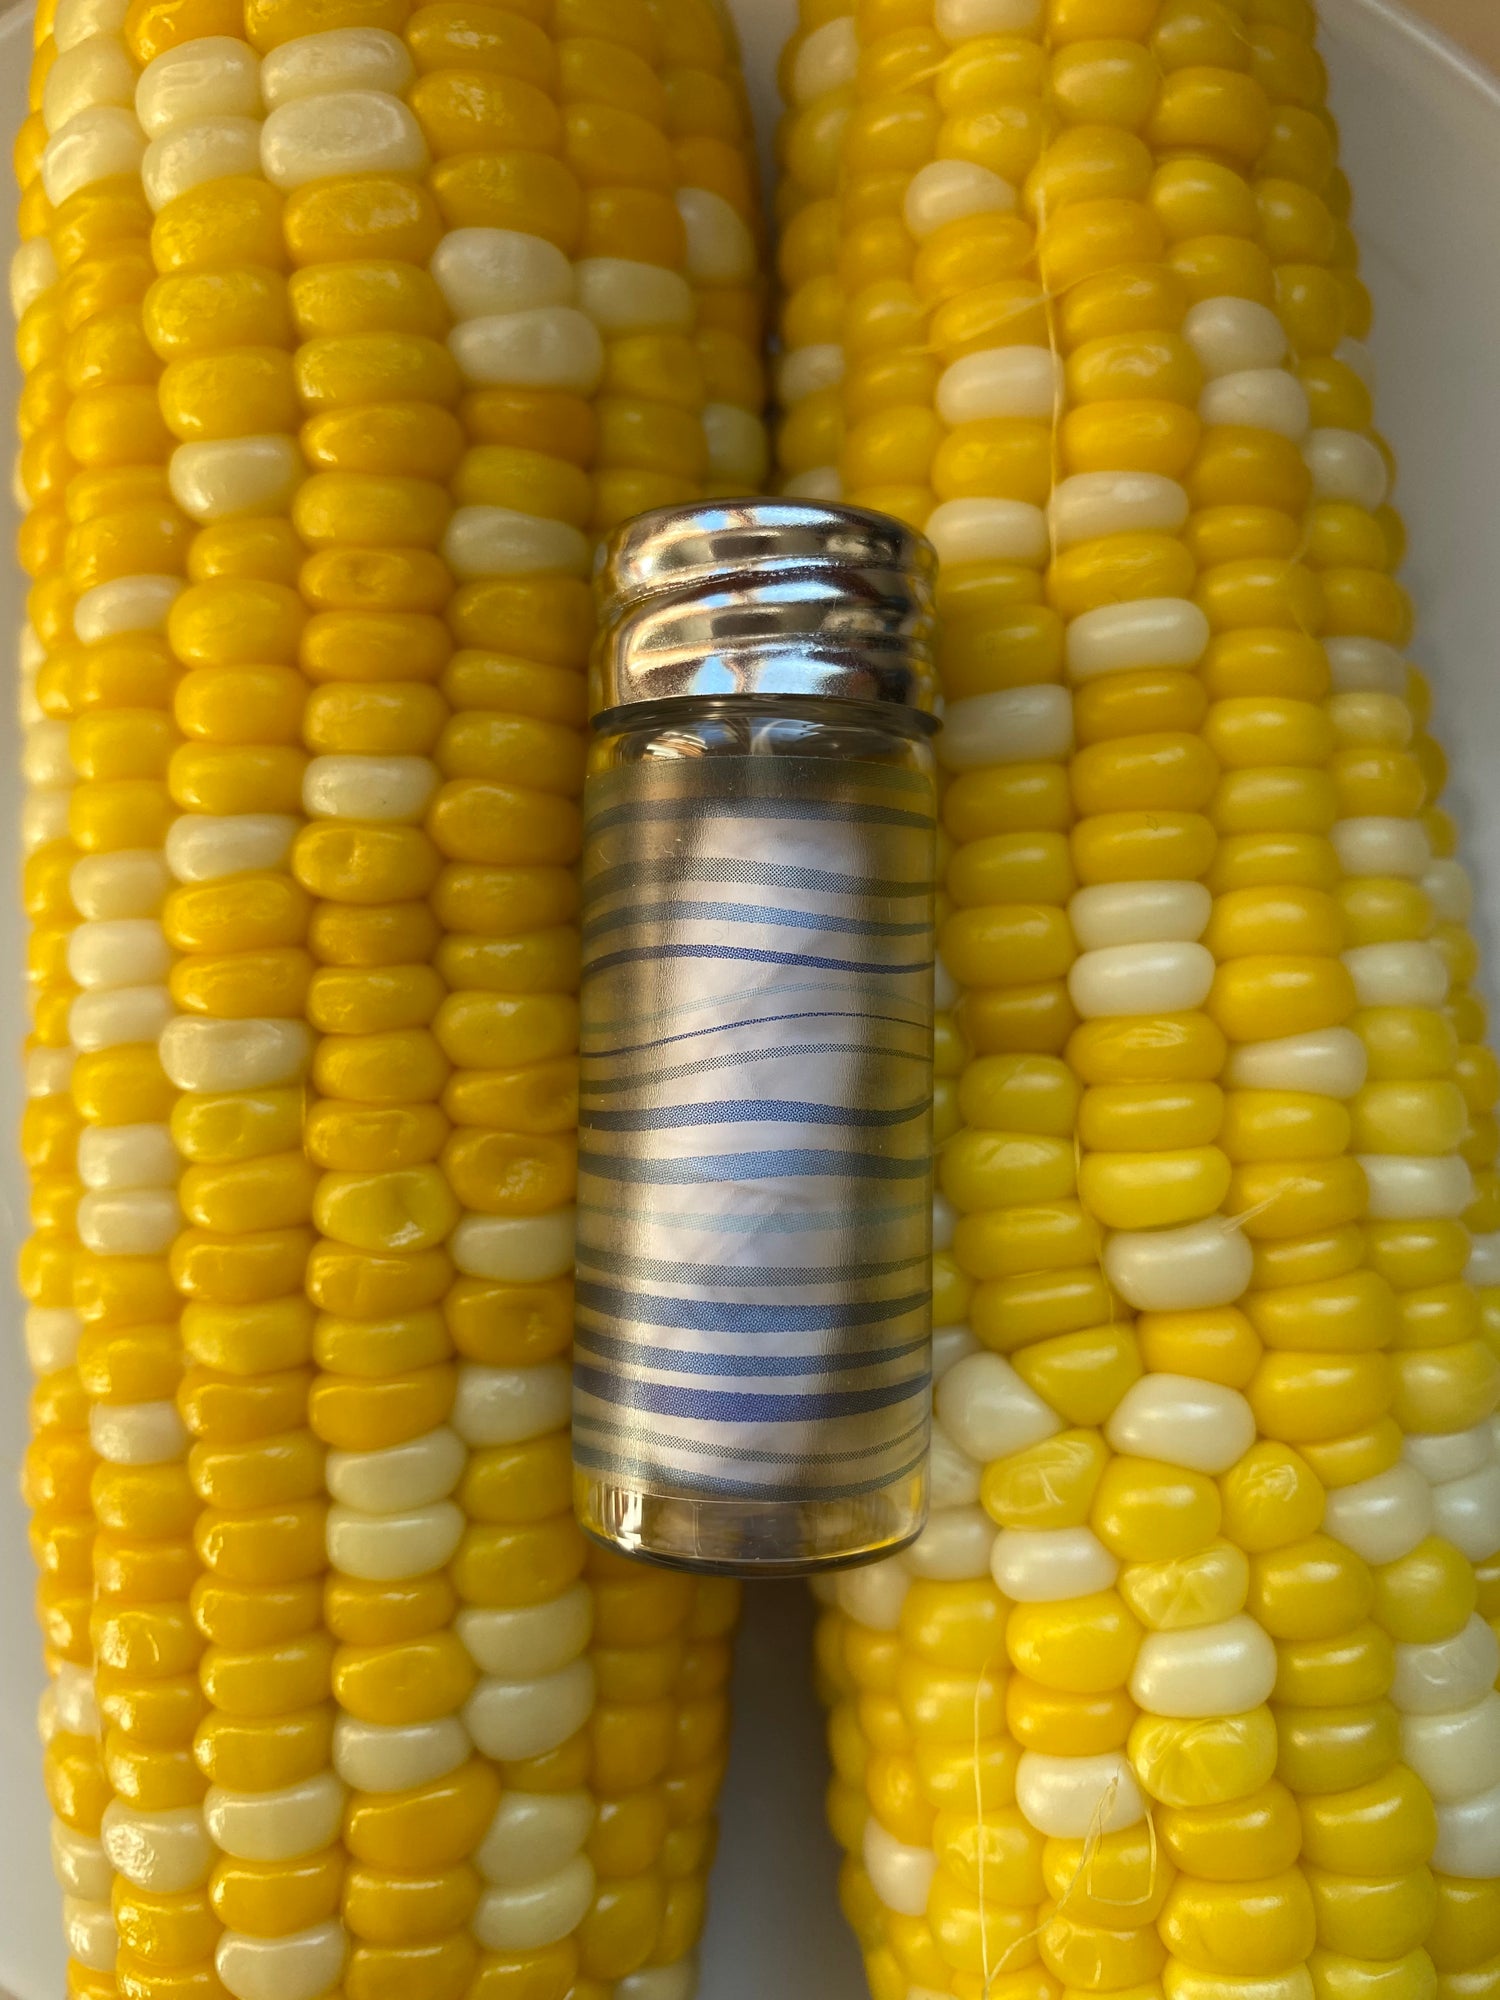 August: "Corn" season is floss season